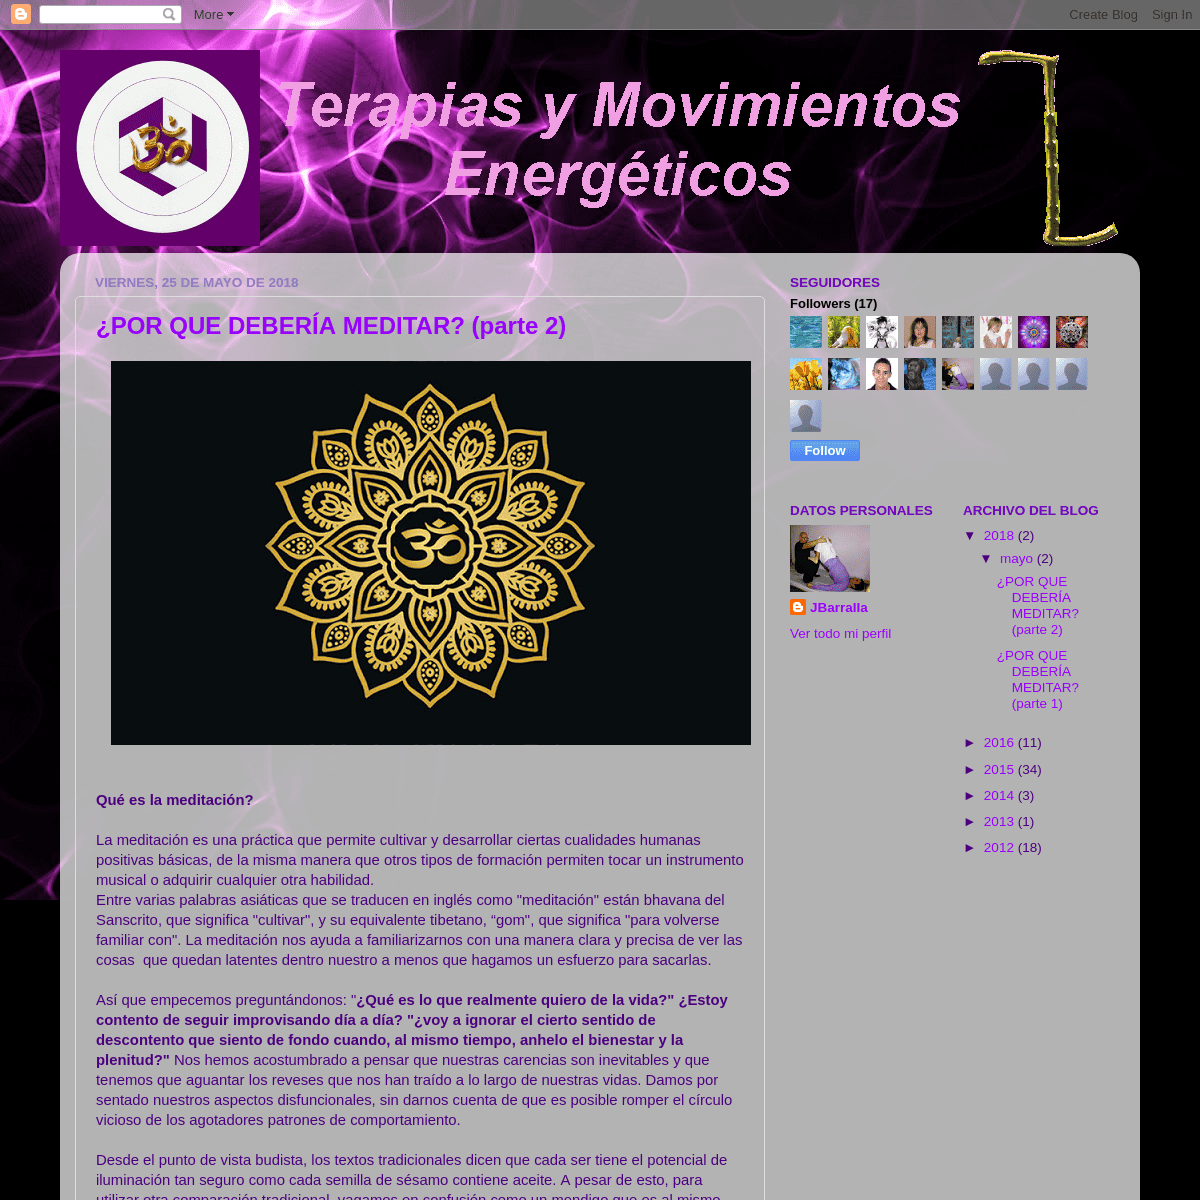 A complete backup of movimientosenergeticos.blogspot.com